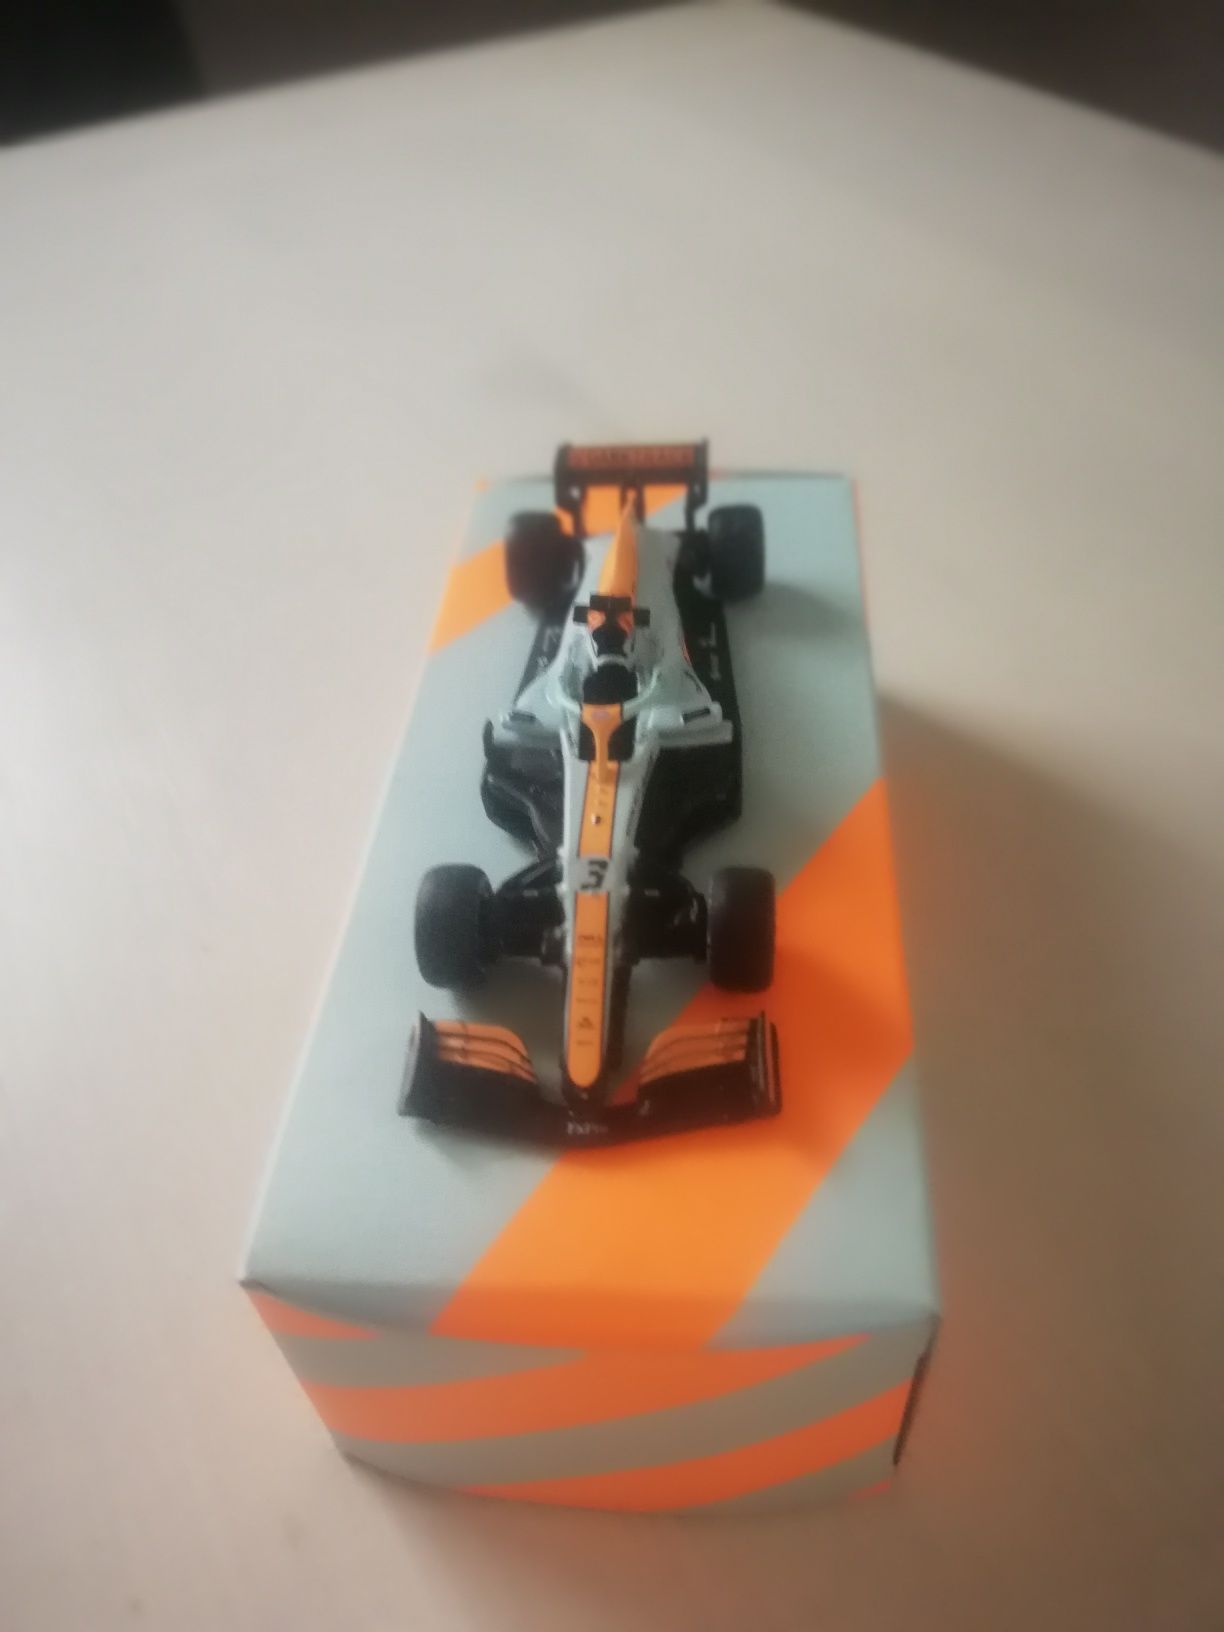 McLaren model: Monako Gulf 1:64